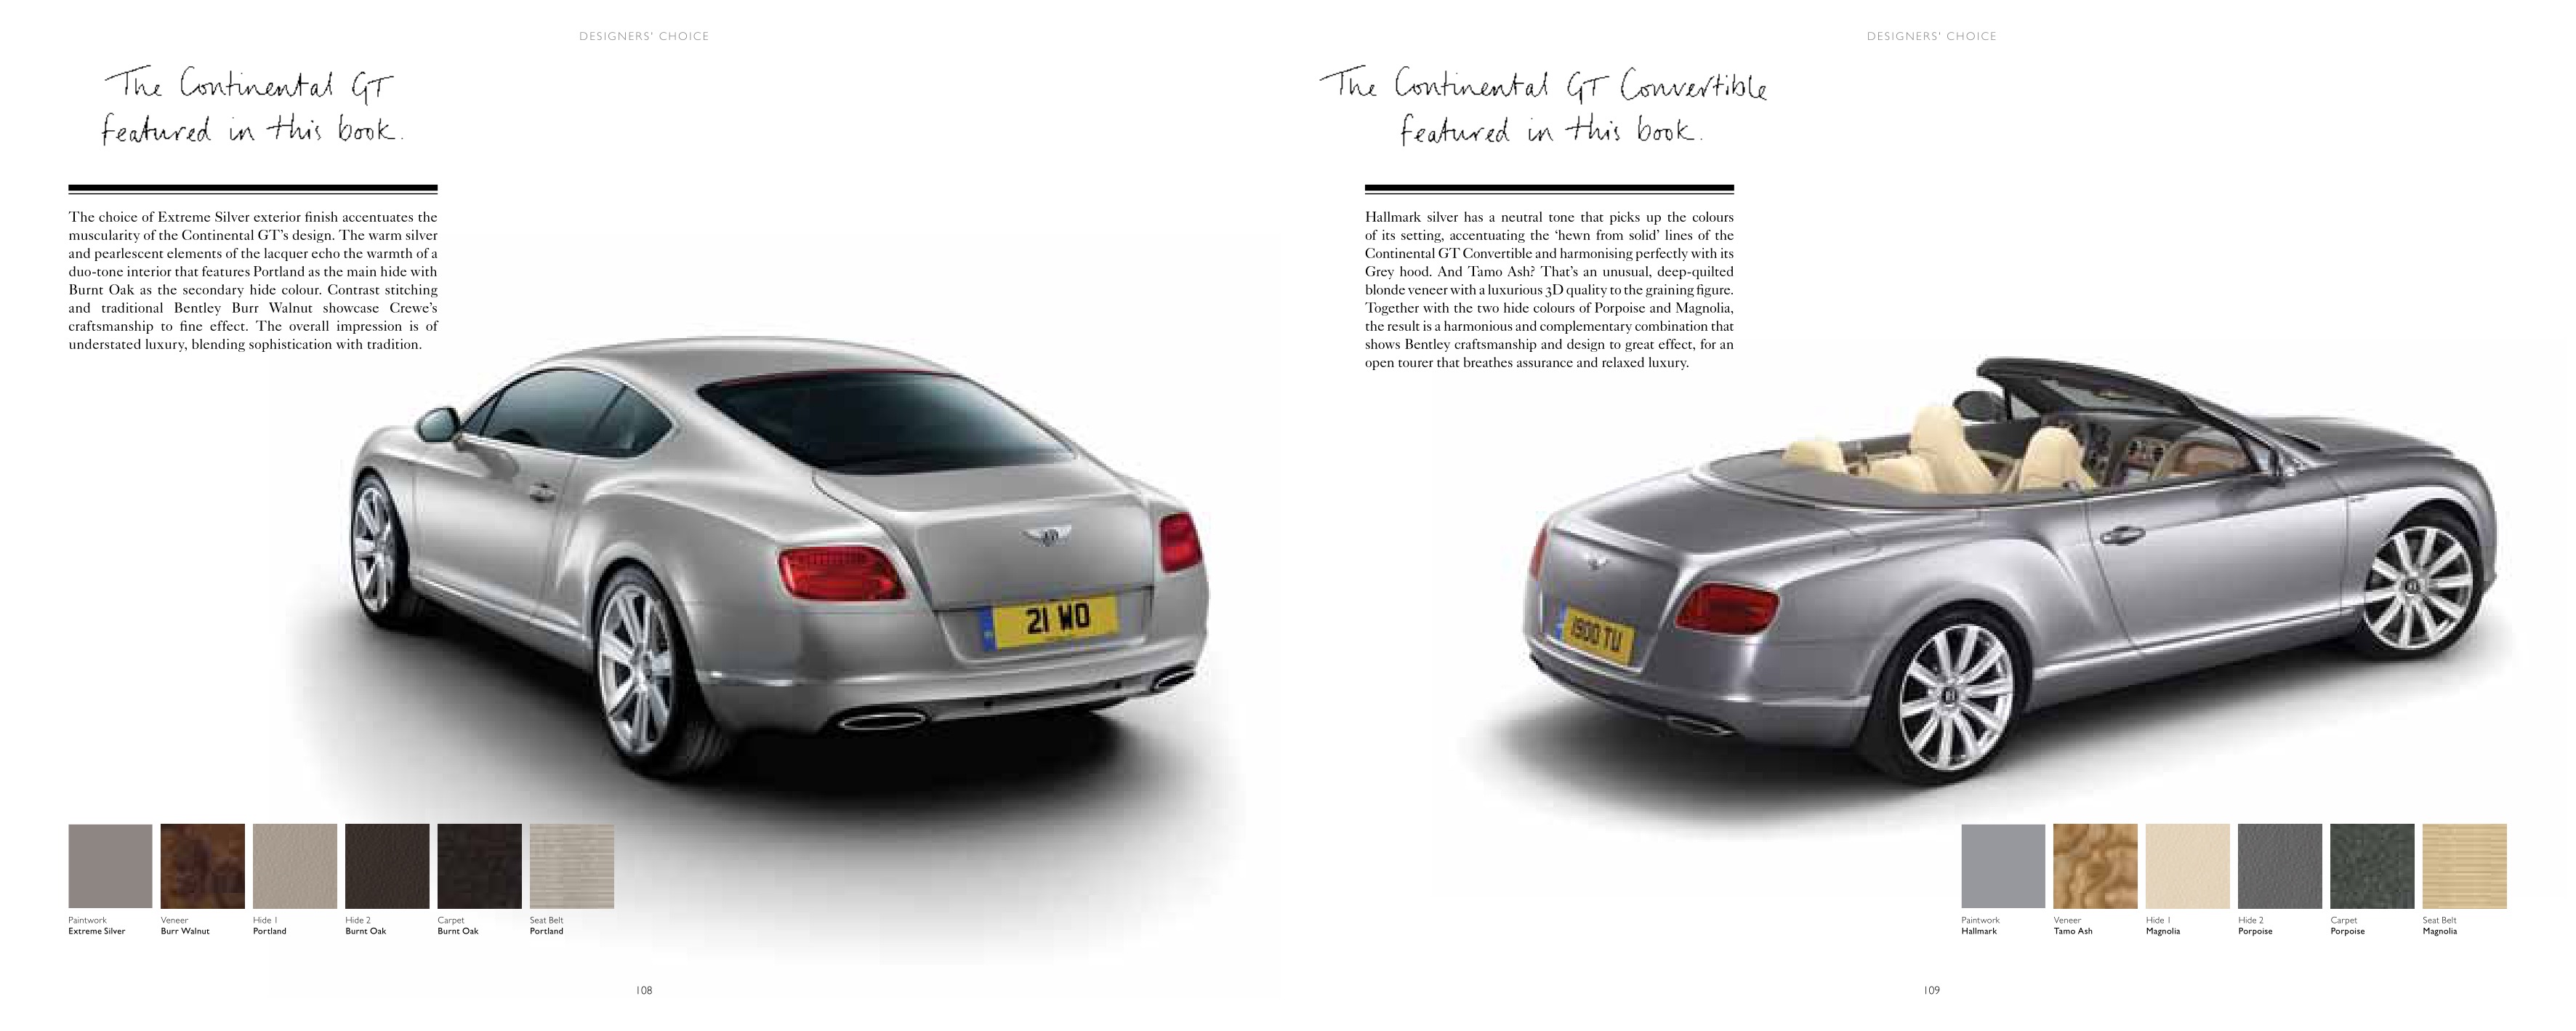 2013 Bentley Continental GT Brochure Page 33